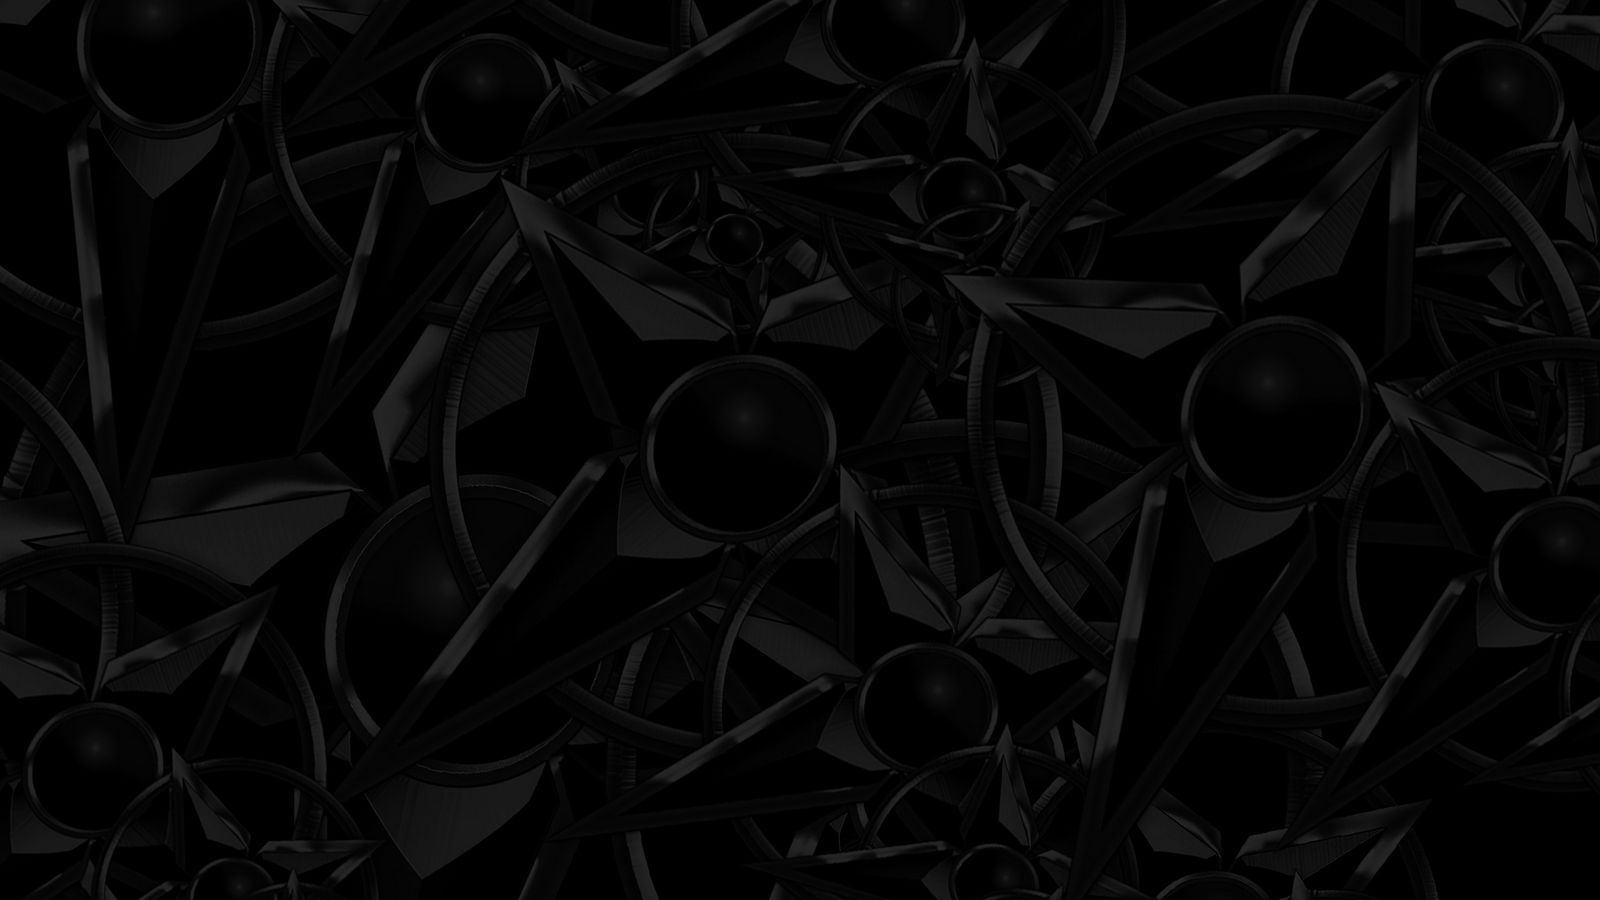 Download wallpaper 1600x900 texture, black, dark, structure widescreen 16:9  hd background